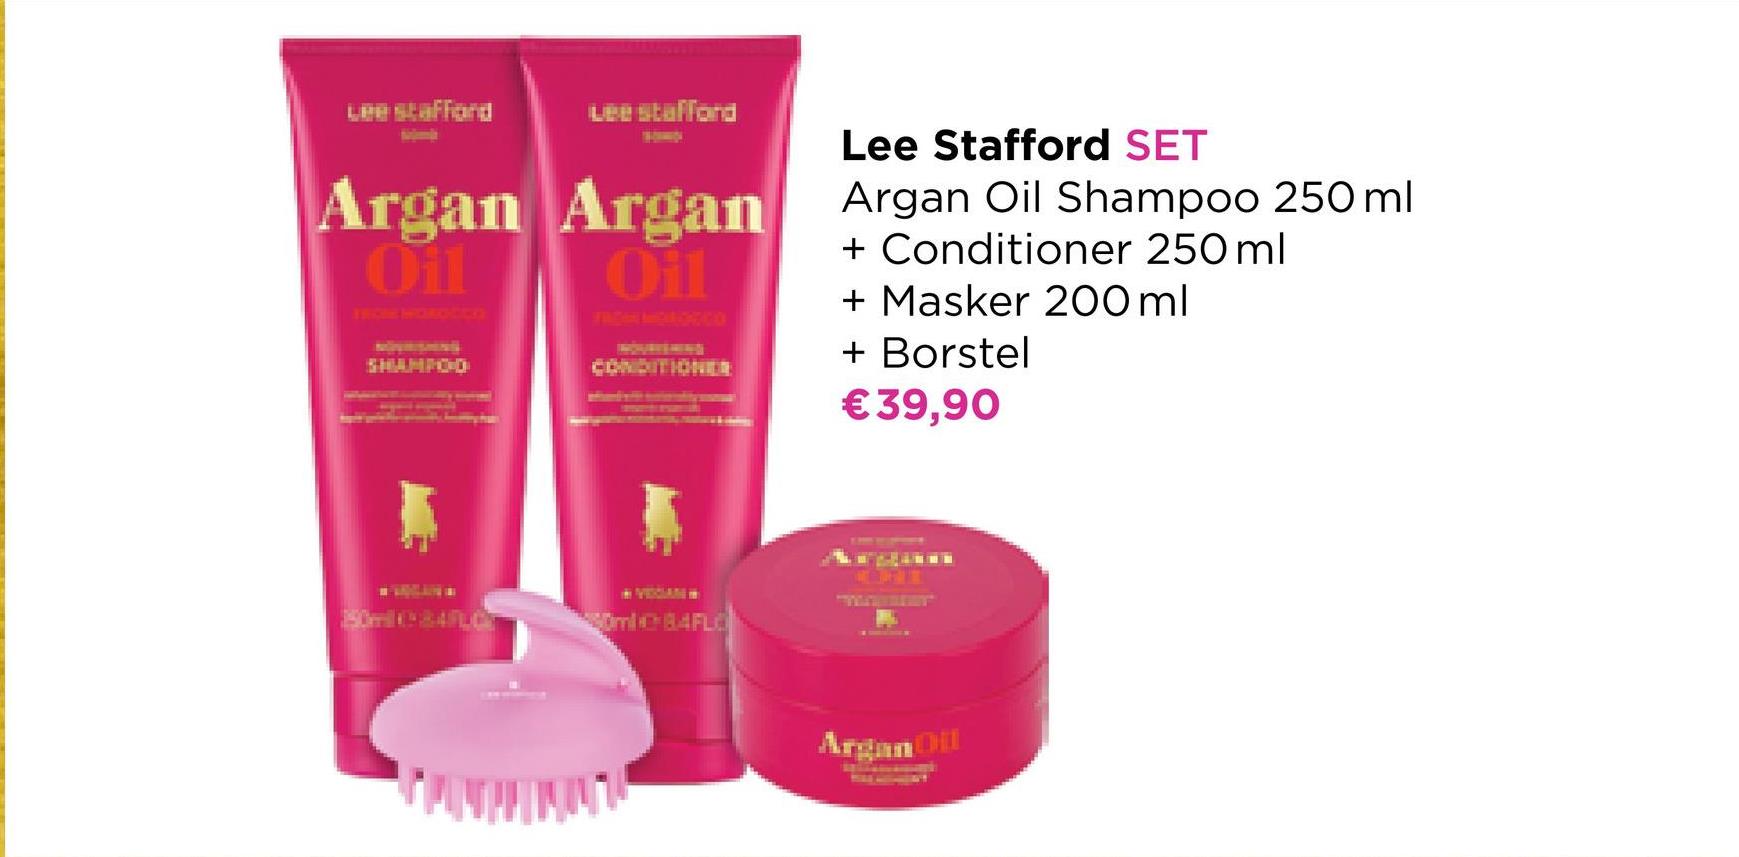 Argan
Oil
A
Lee stafford
Argan
Oil
Lee Stafford SET
Argan Oil Shampoo 250 ml
+ Conditioner 250 ml
+ Masker 200 ml
+ Borstel
€ 39,90
Argan Oil